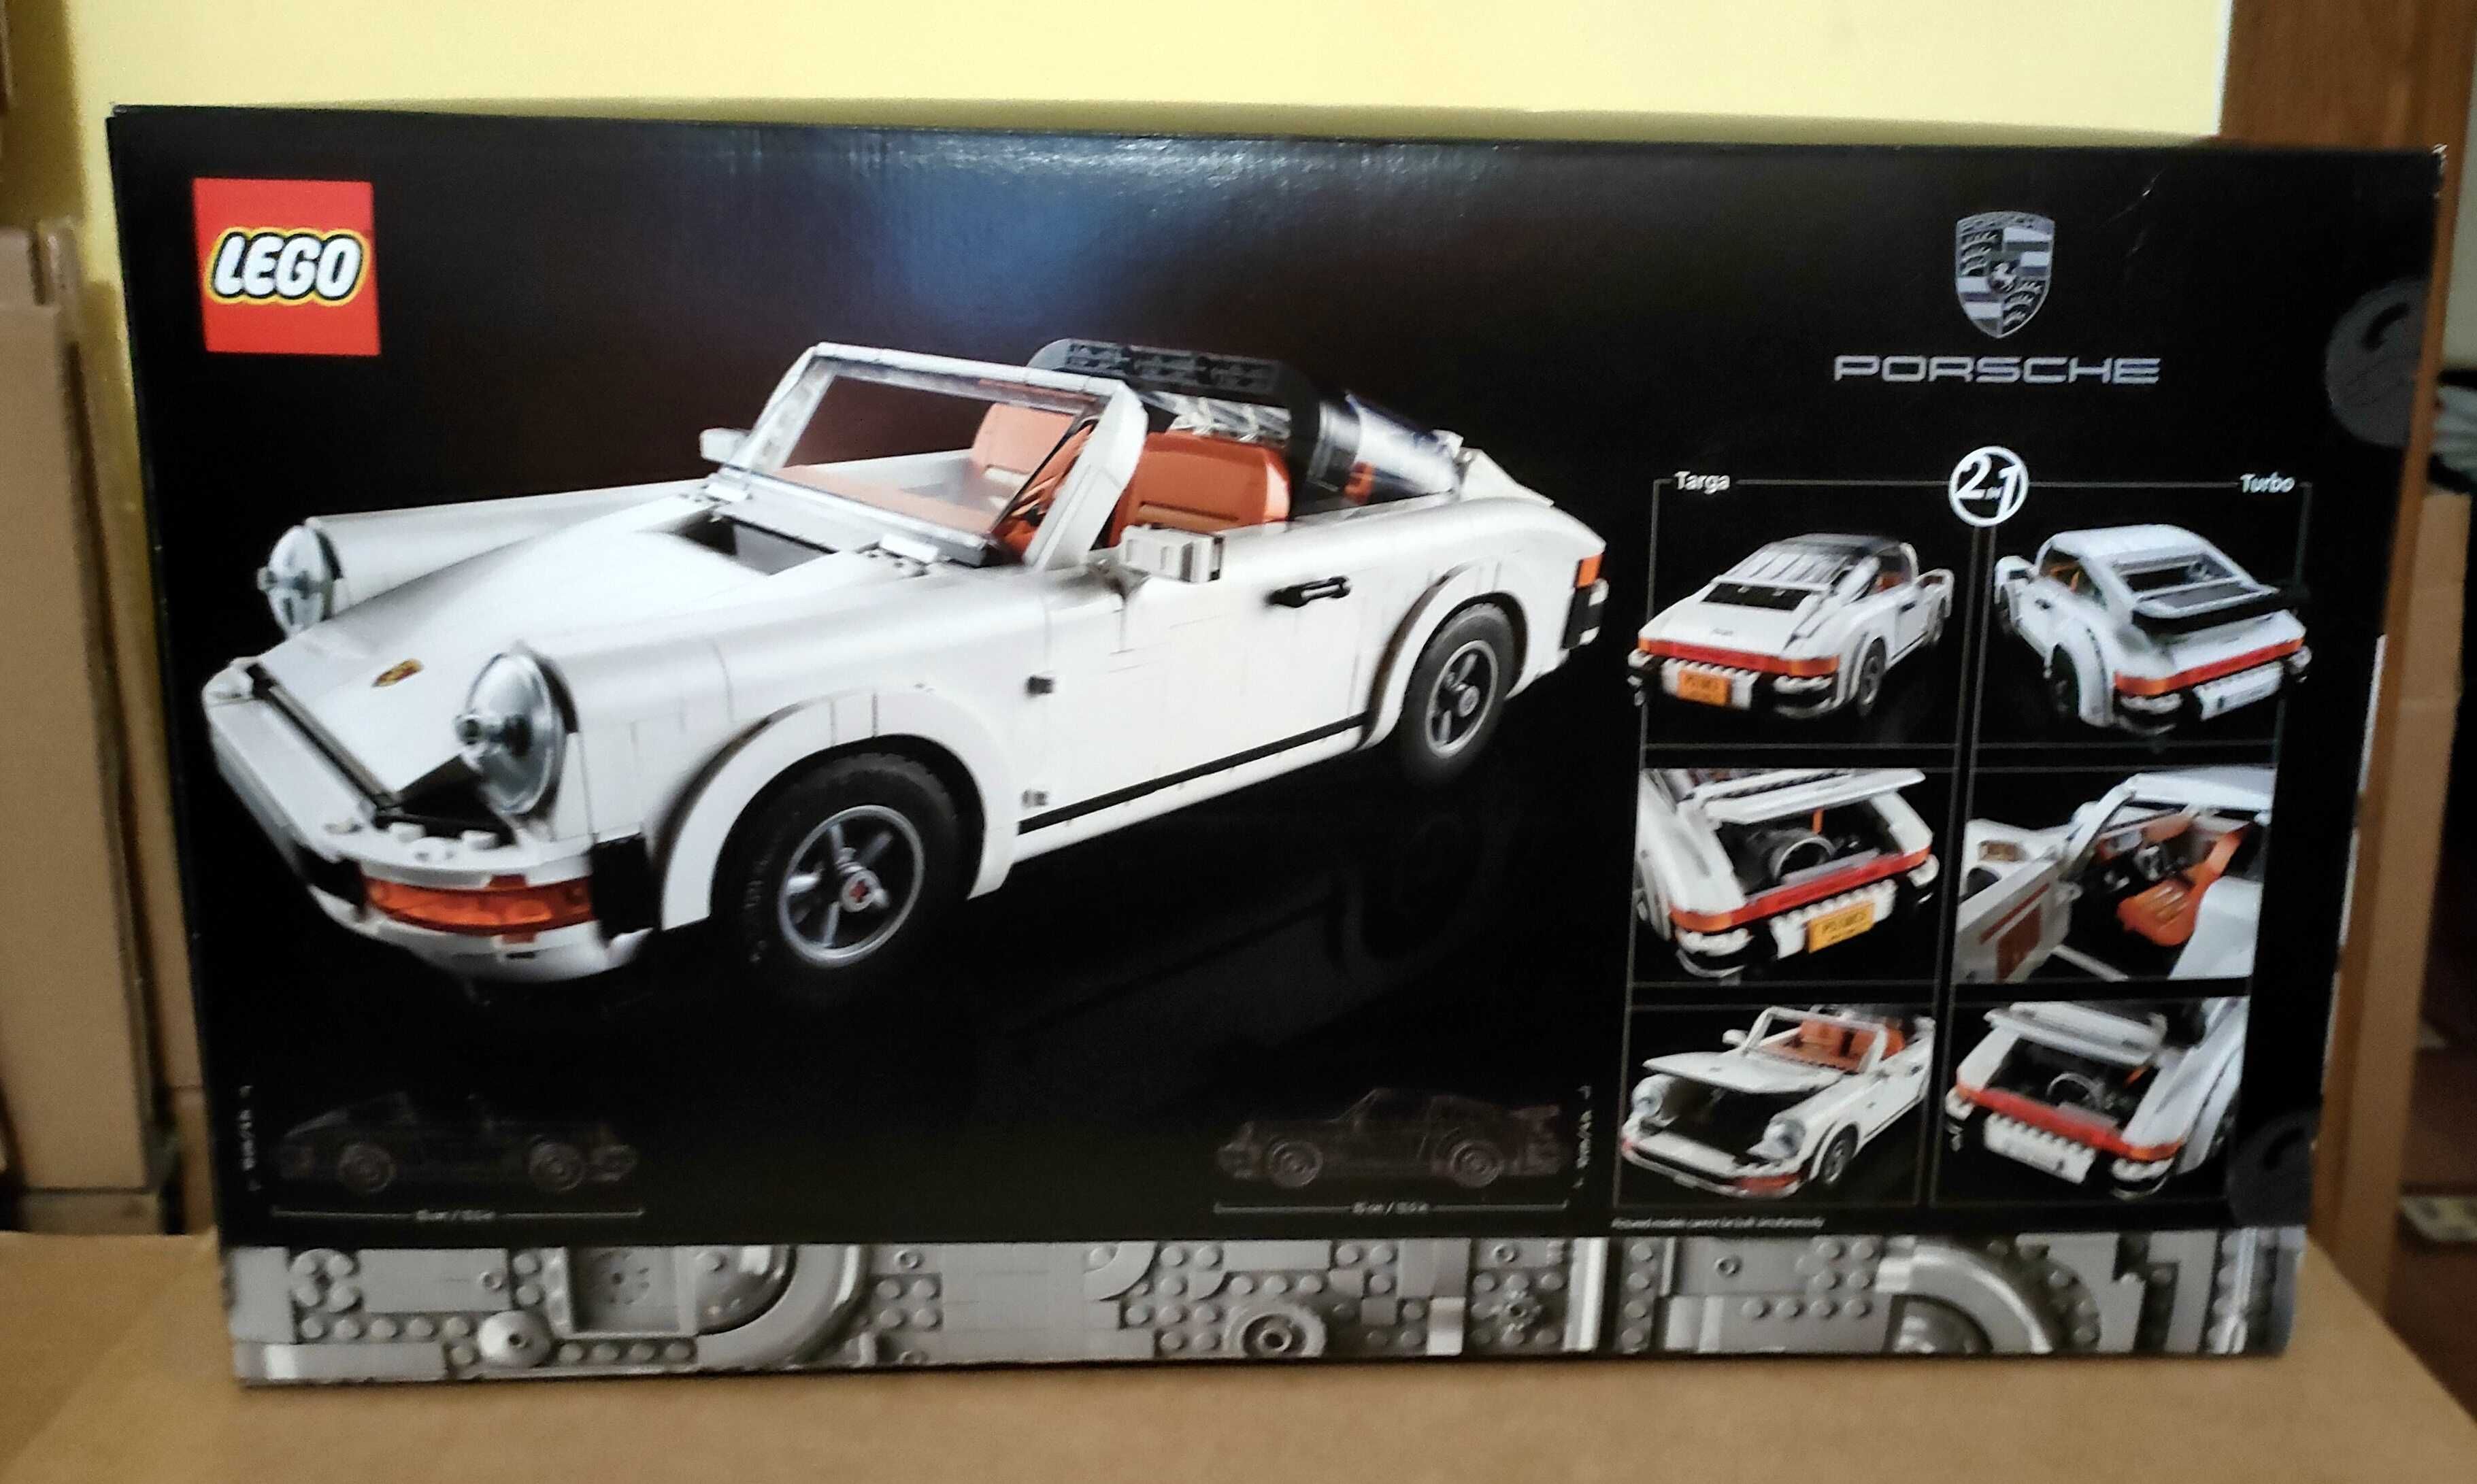 LEGO 10295 Creator Expert - Porsche 911